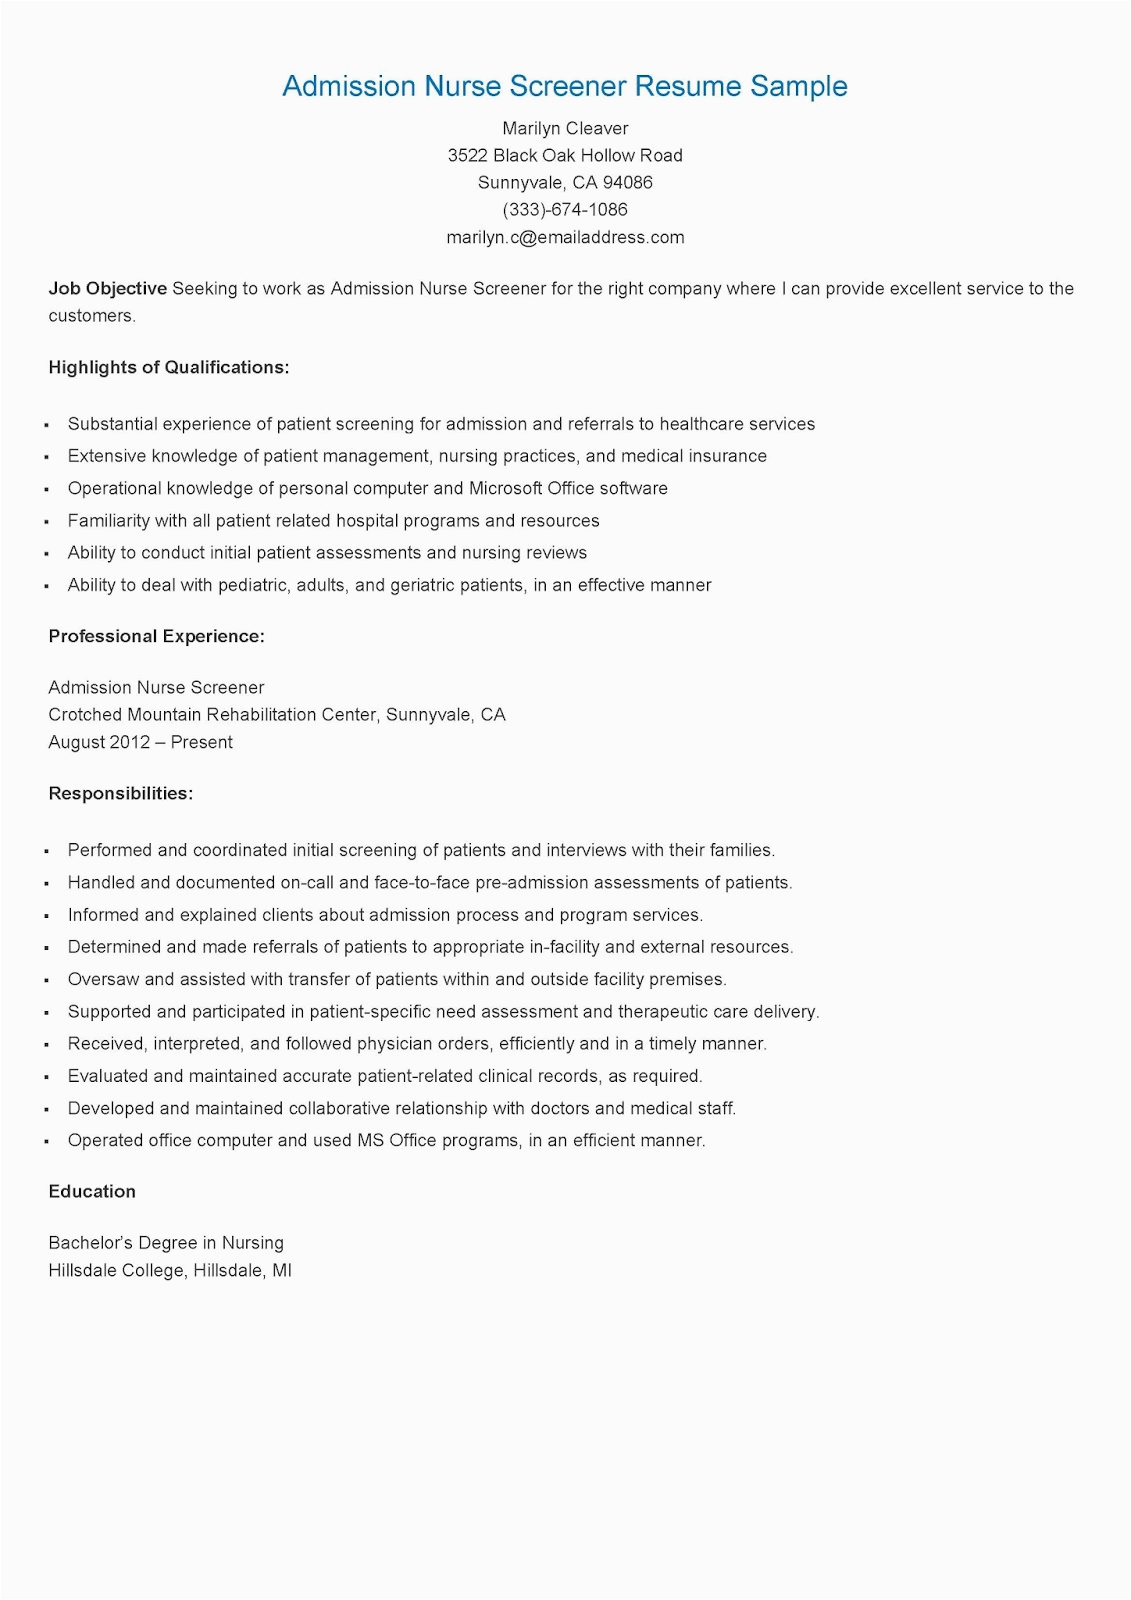 Rn Resume format for College Admission Sample Resume Samples Admission Nurse Screener Resume Sample